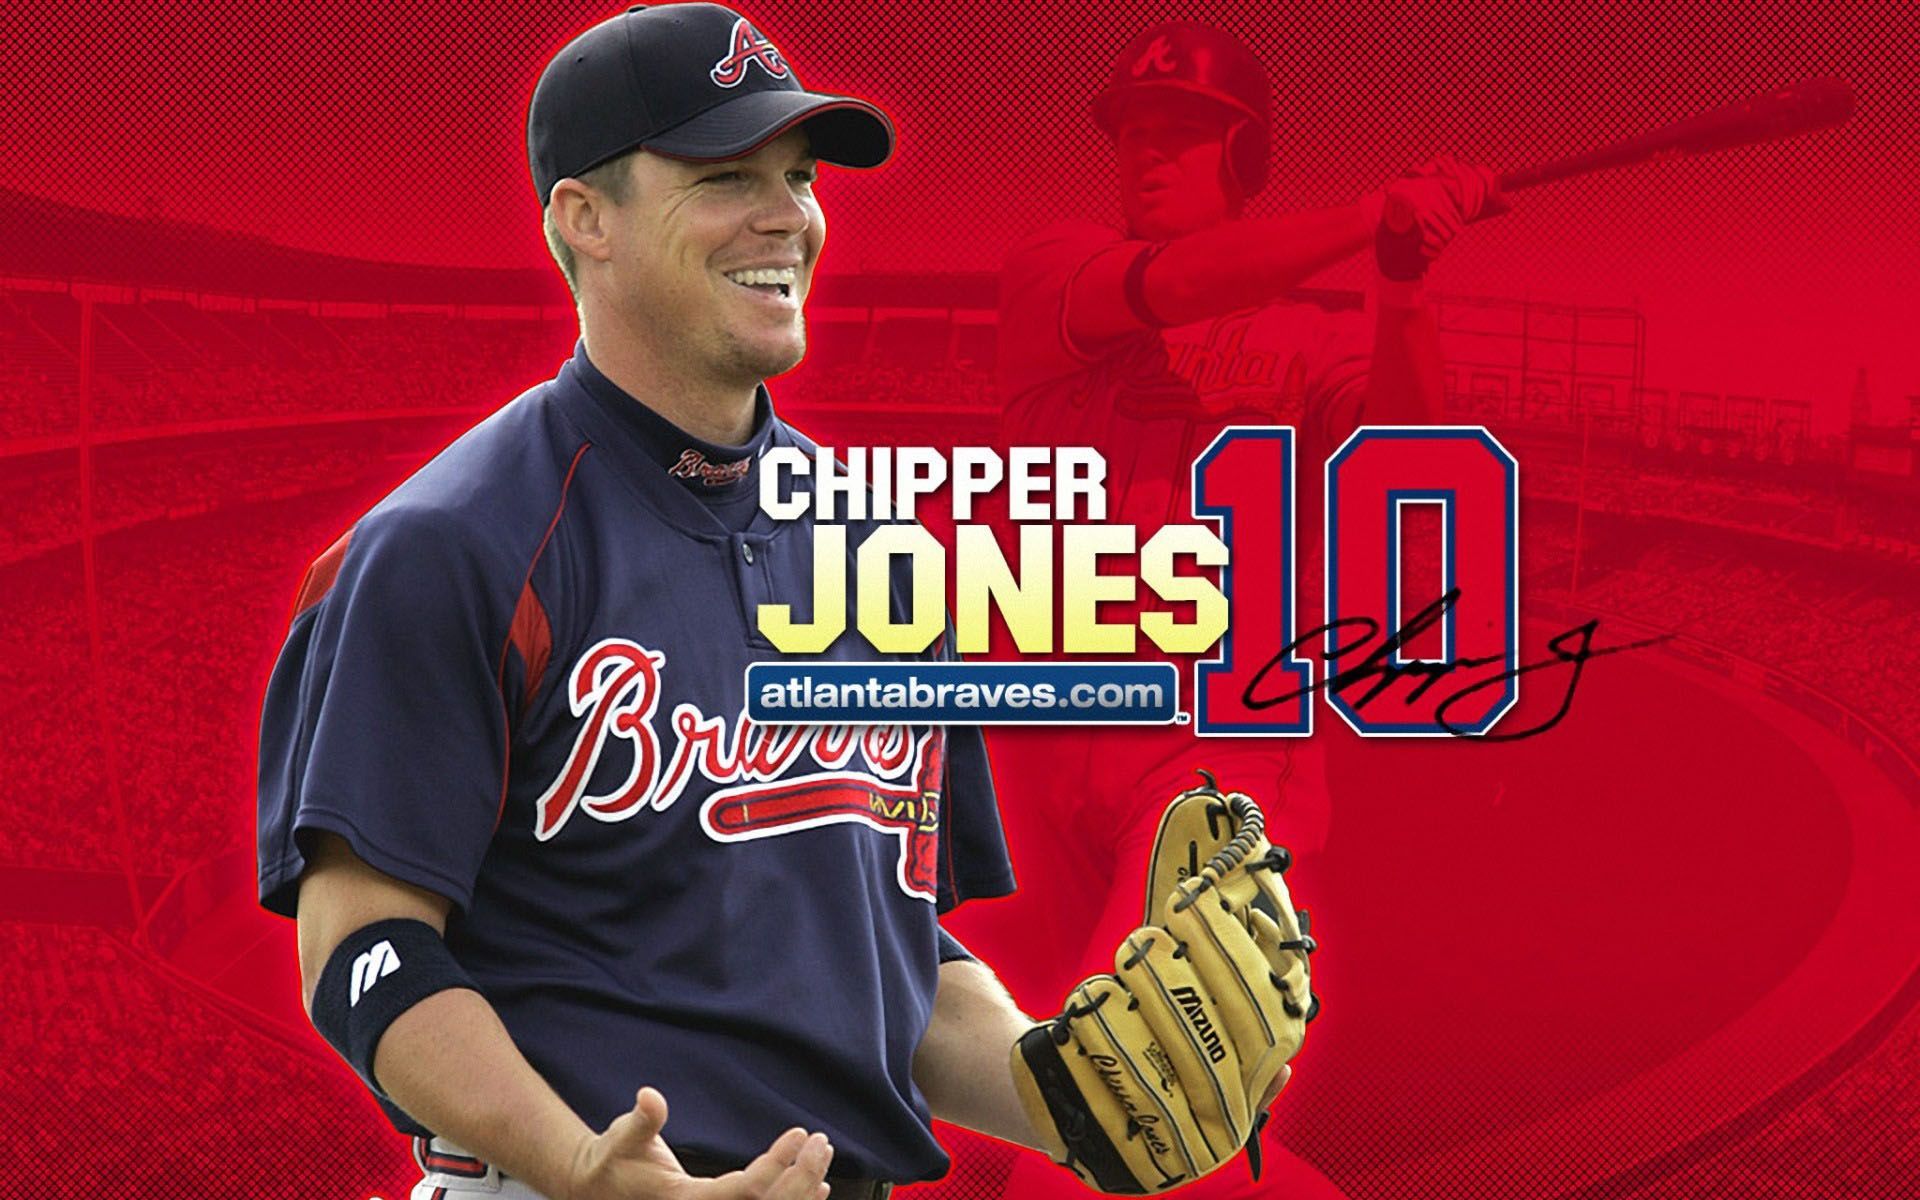 Atlanta Braves Chipper Jones 1920x1200 Wallpapers, 1920x1200 ...